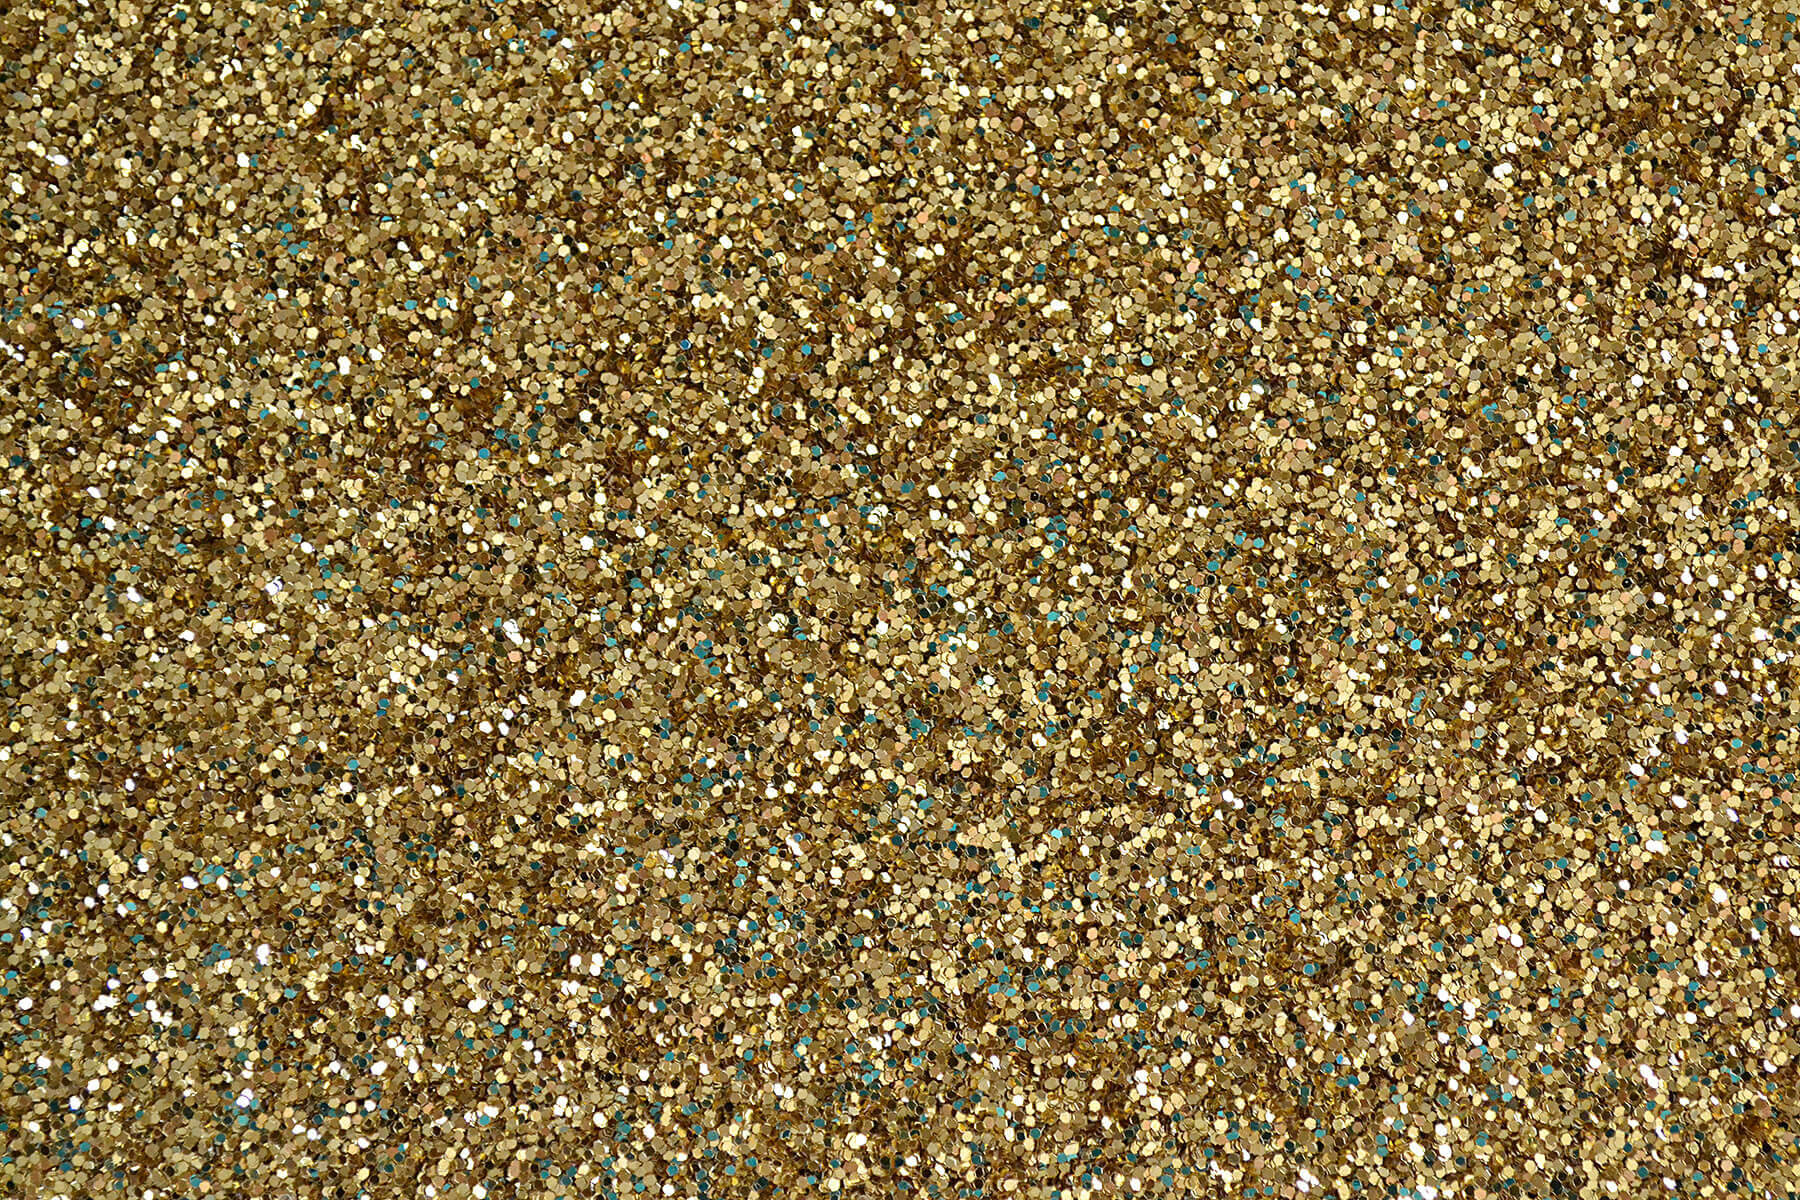 46+] Glitter Gold Wallpaper - WallpaperSafari